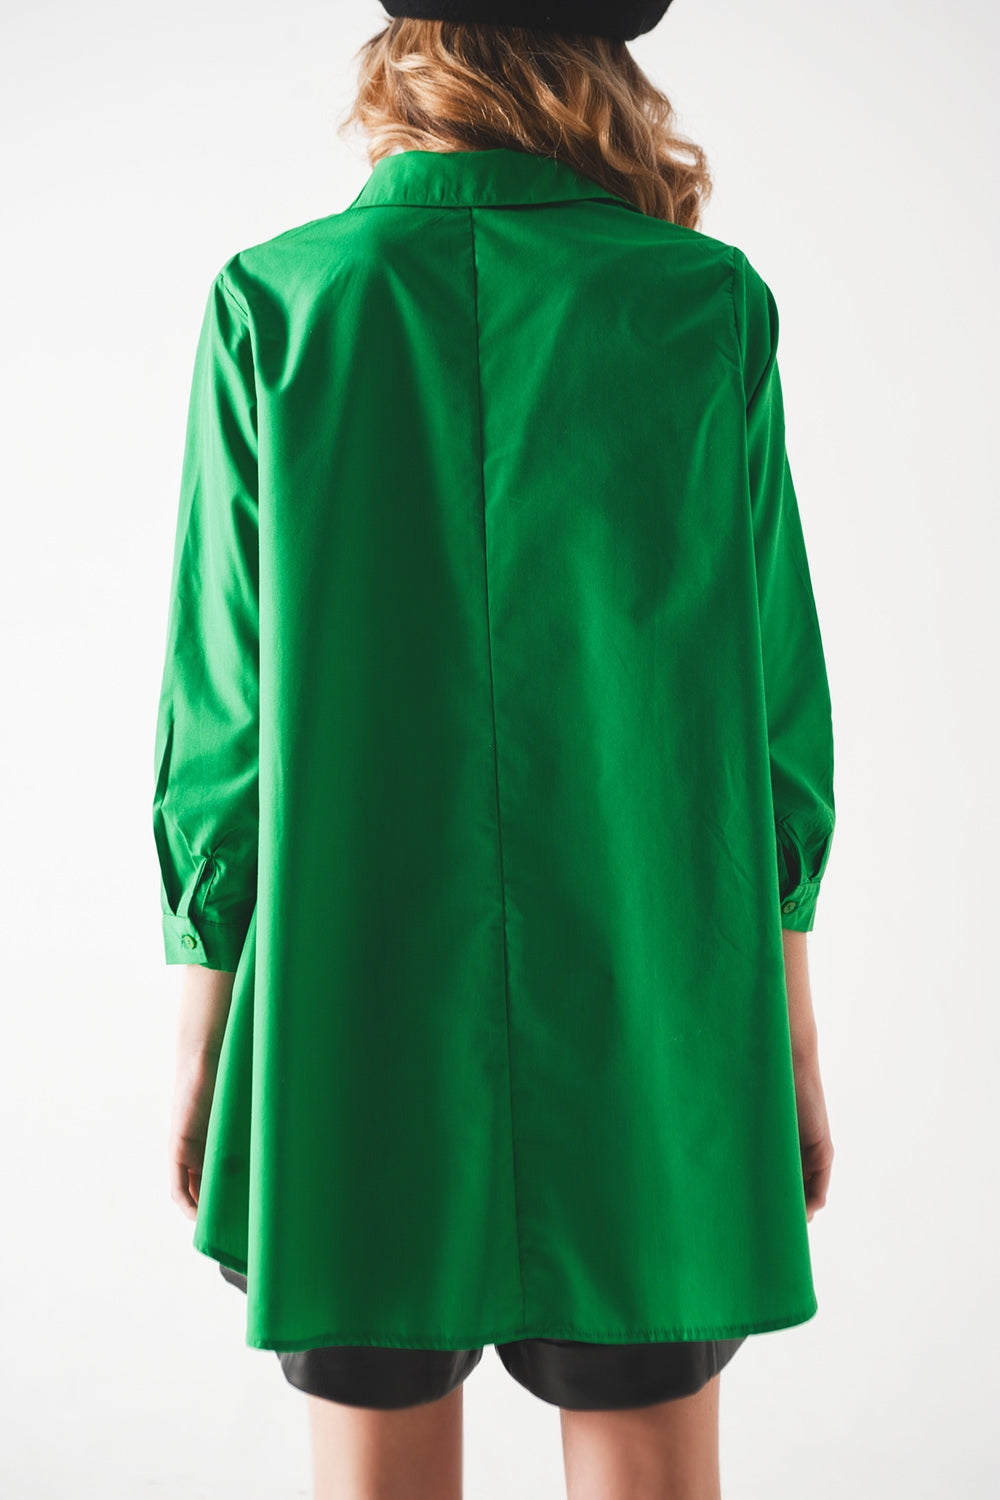 Oversized shirt in bold green Szua Store